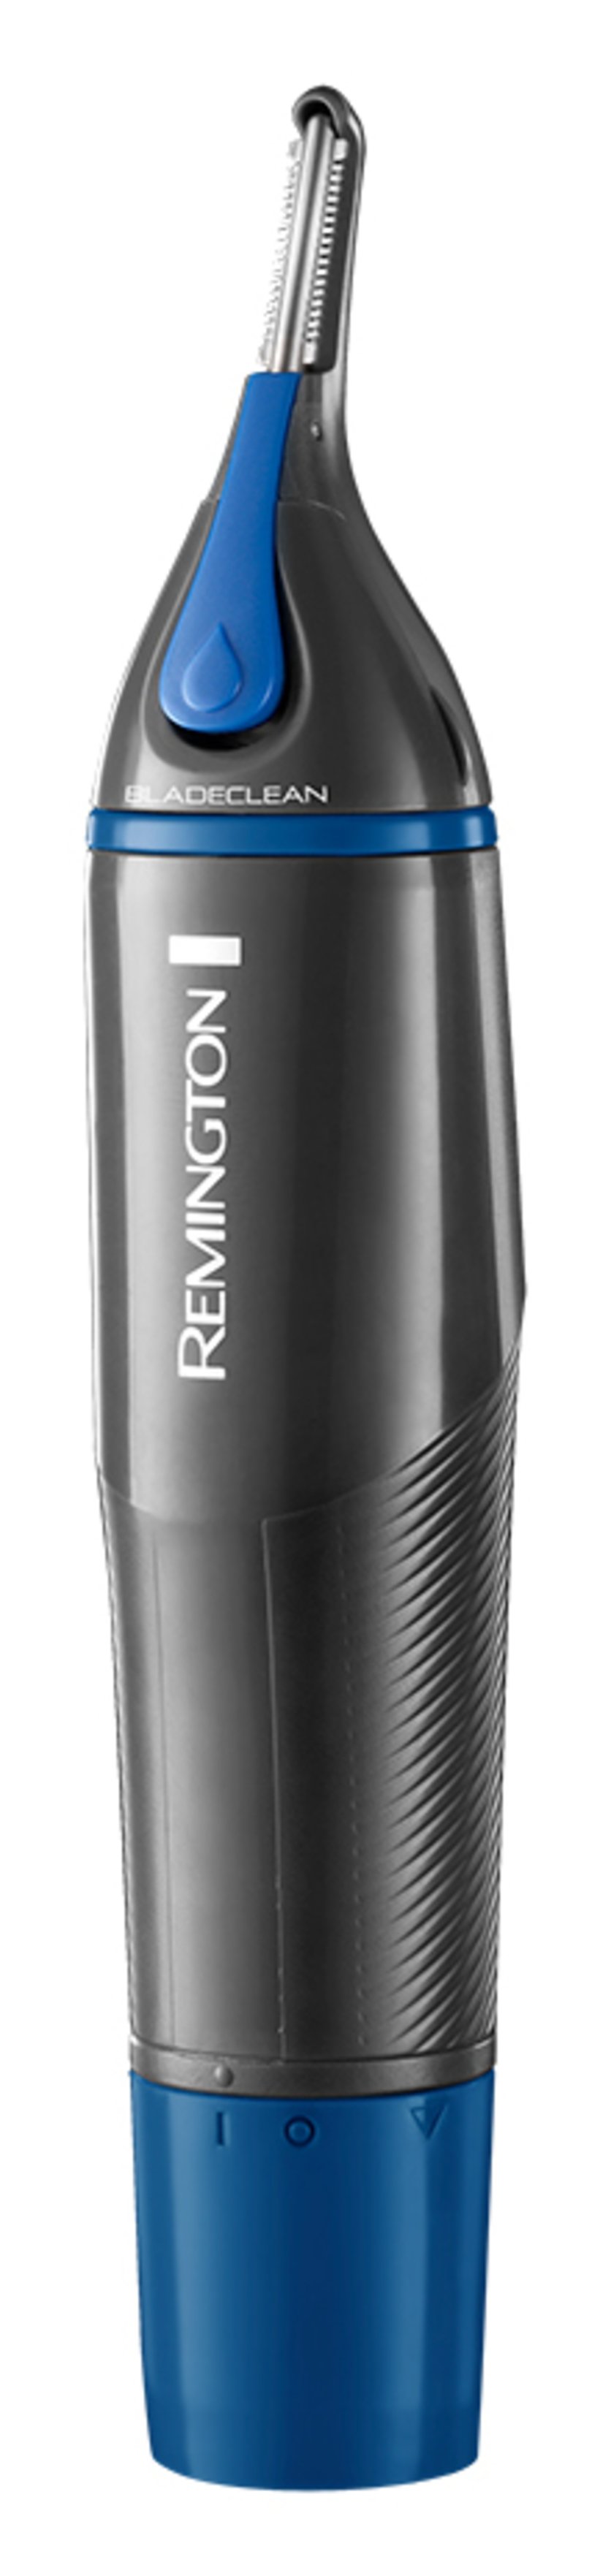 remington nose hair